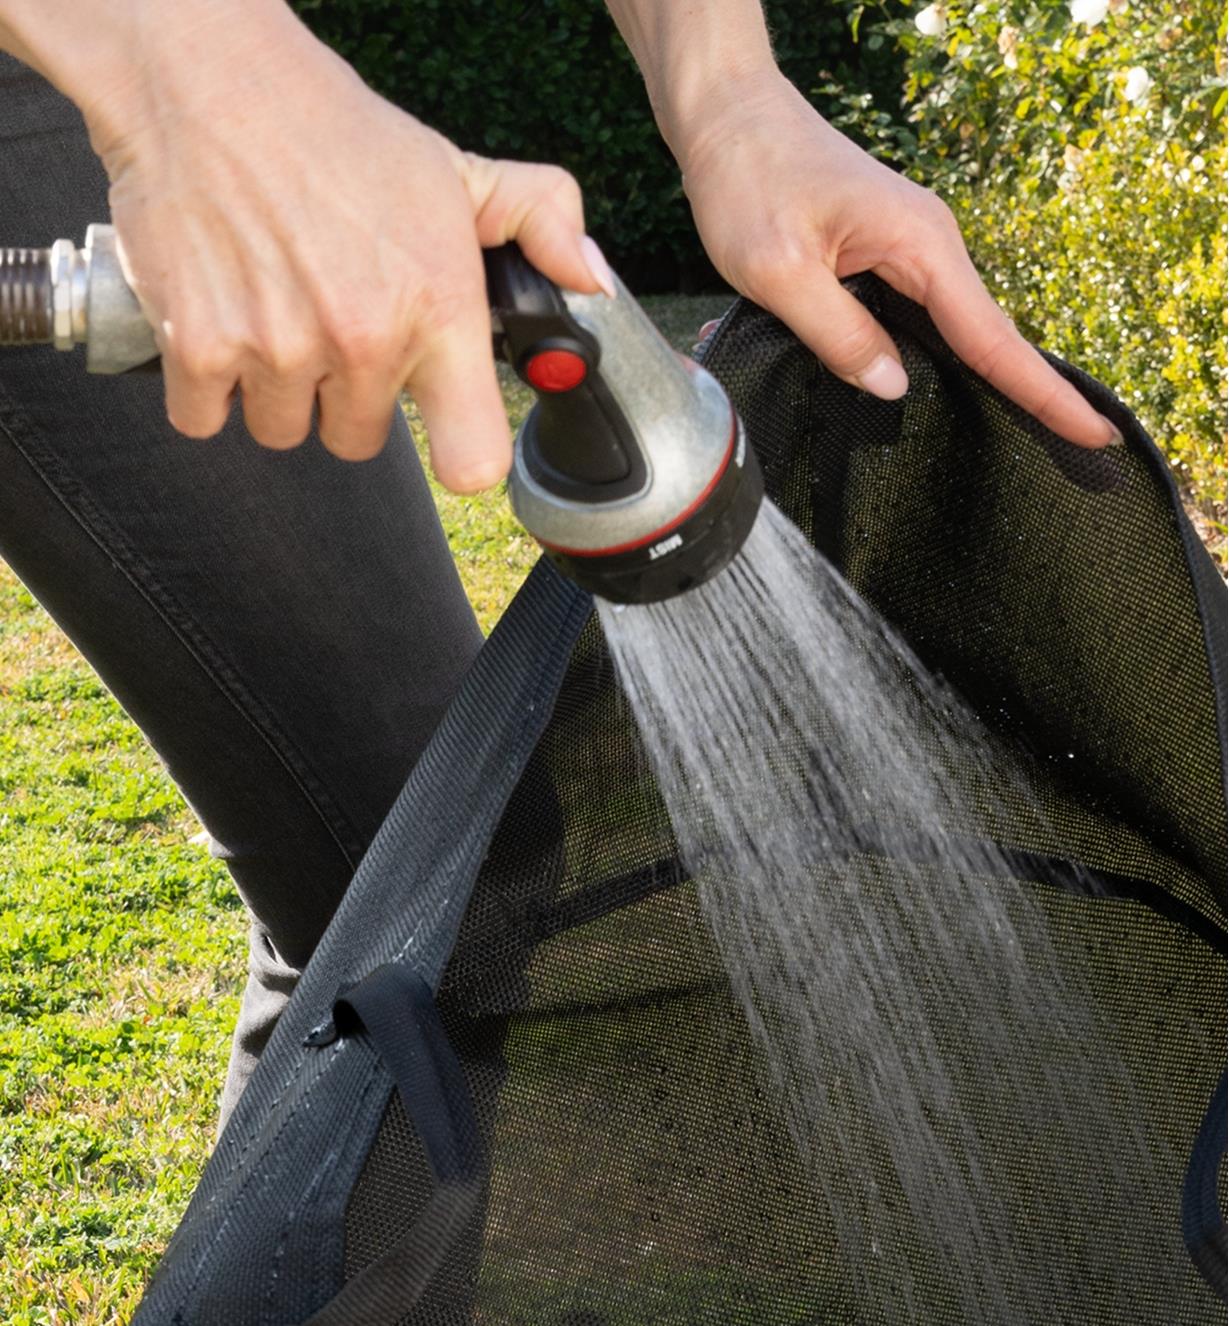 A gardener rinses the 15 gallon mesh fabric pot with a hose